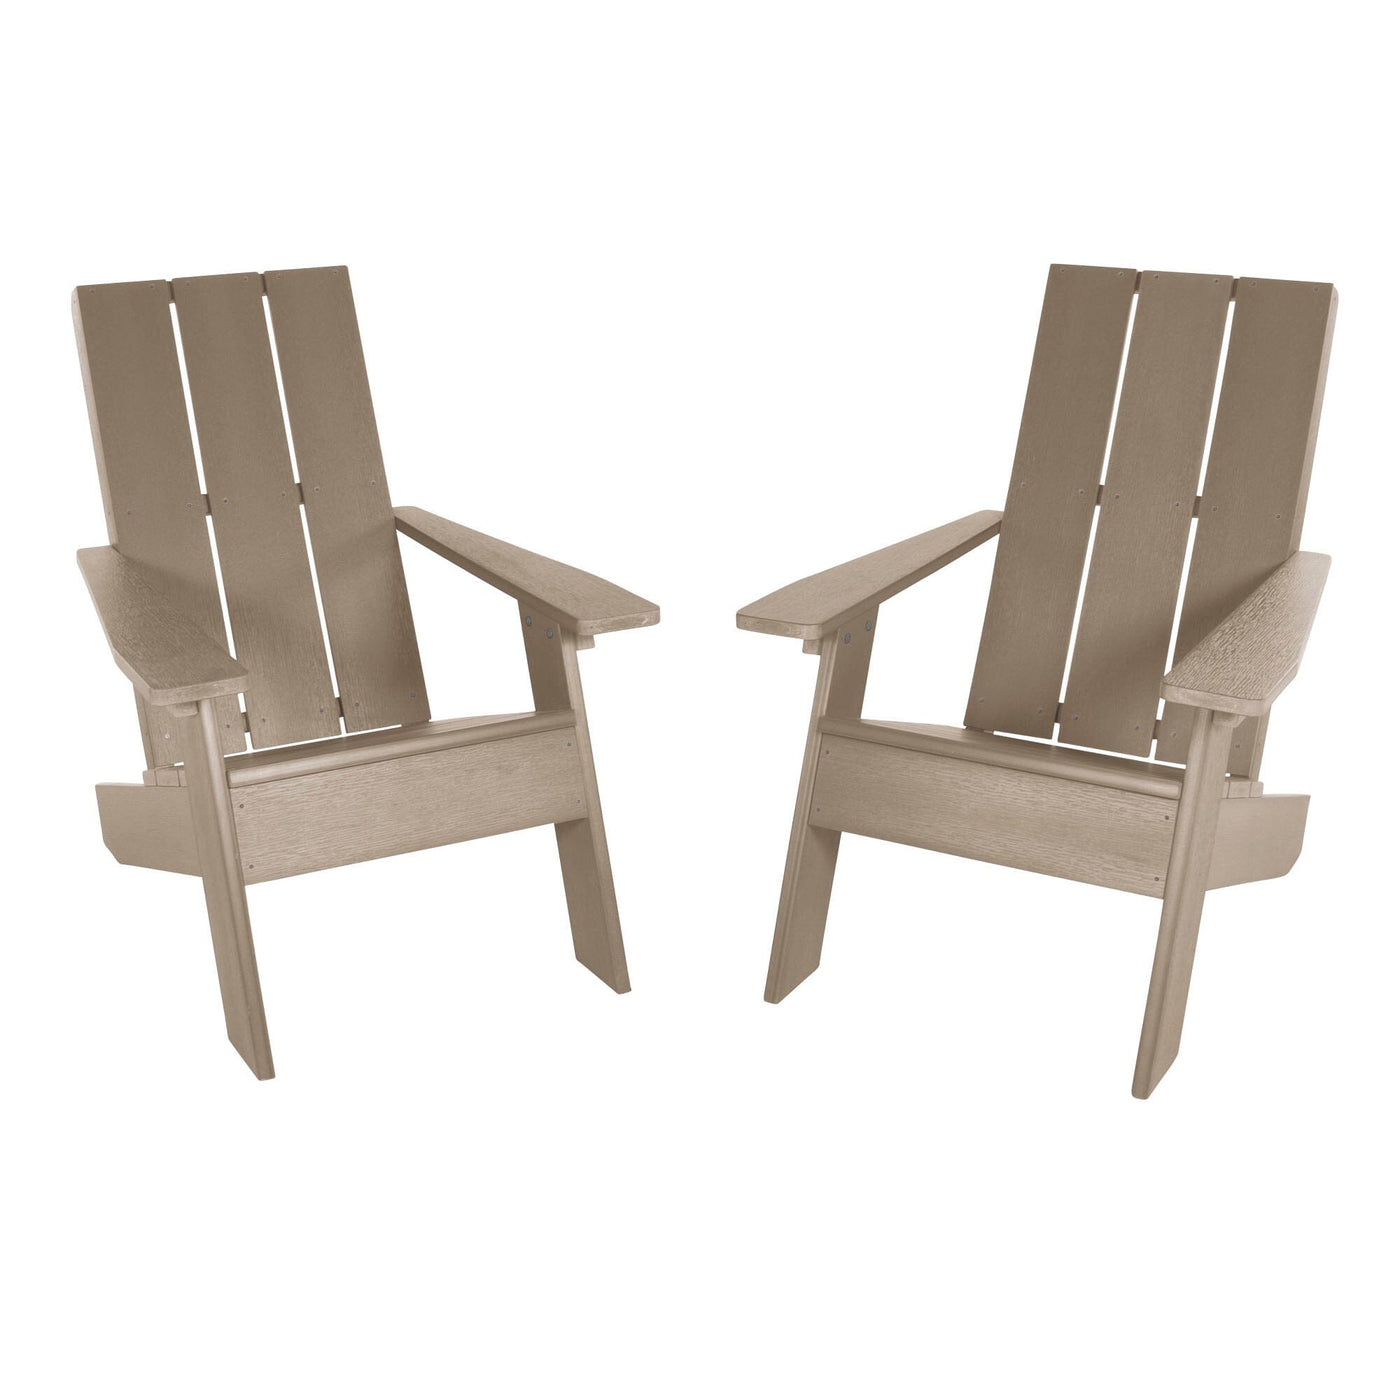 Set of Two Italica Modern Adirondack Chairs Adirondack Chairs Highwood USA Woodland Brown 